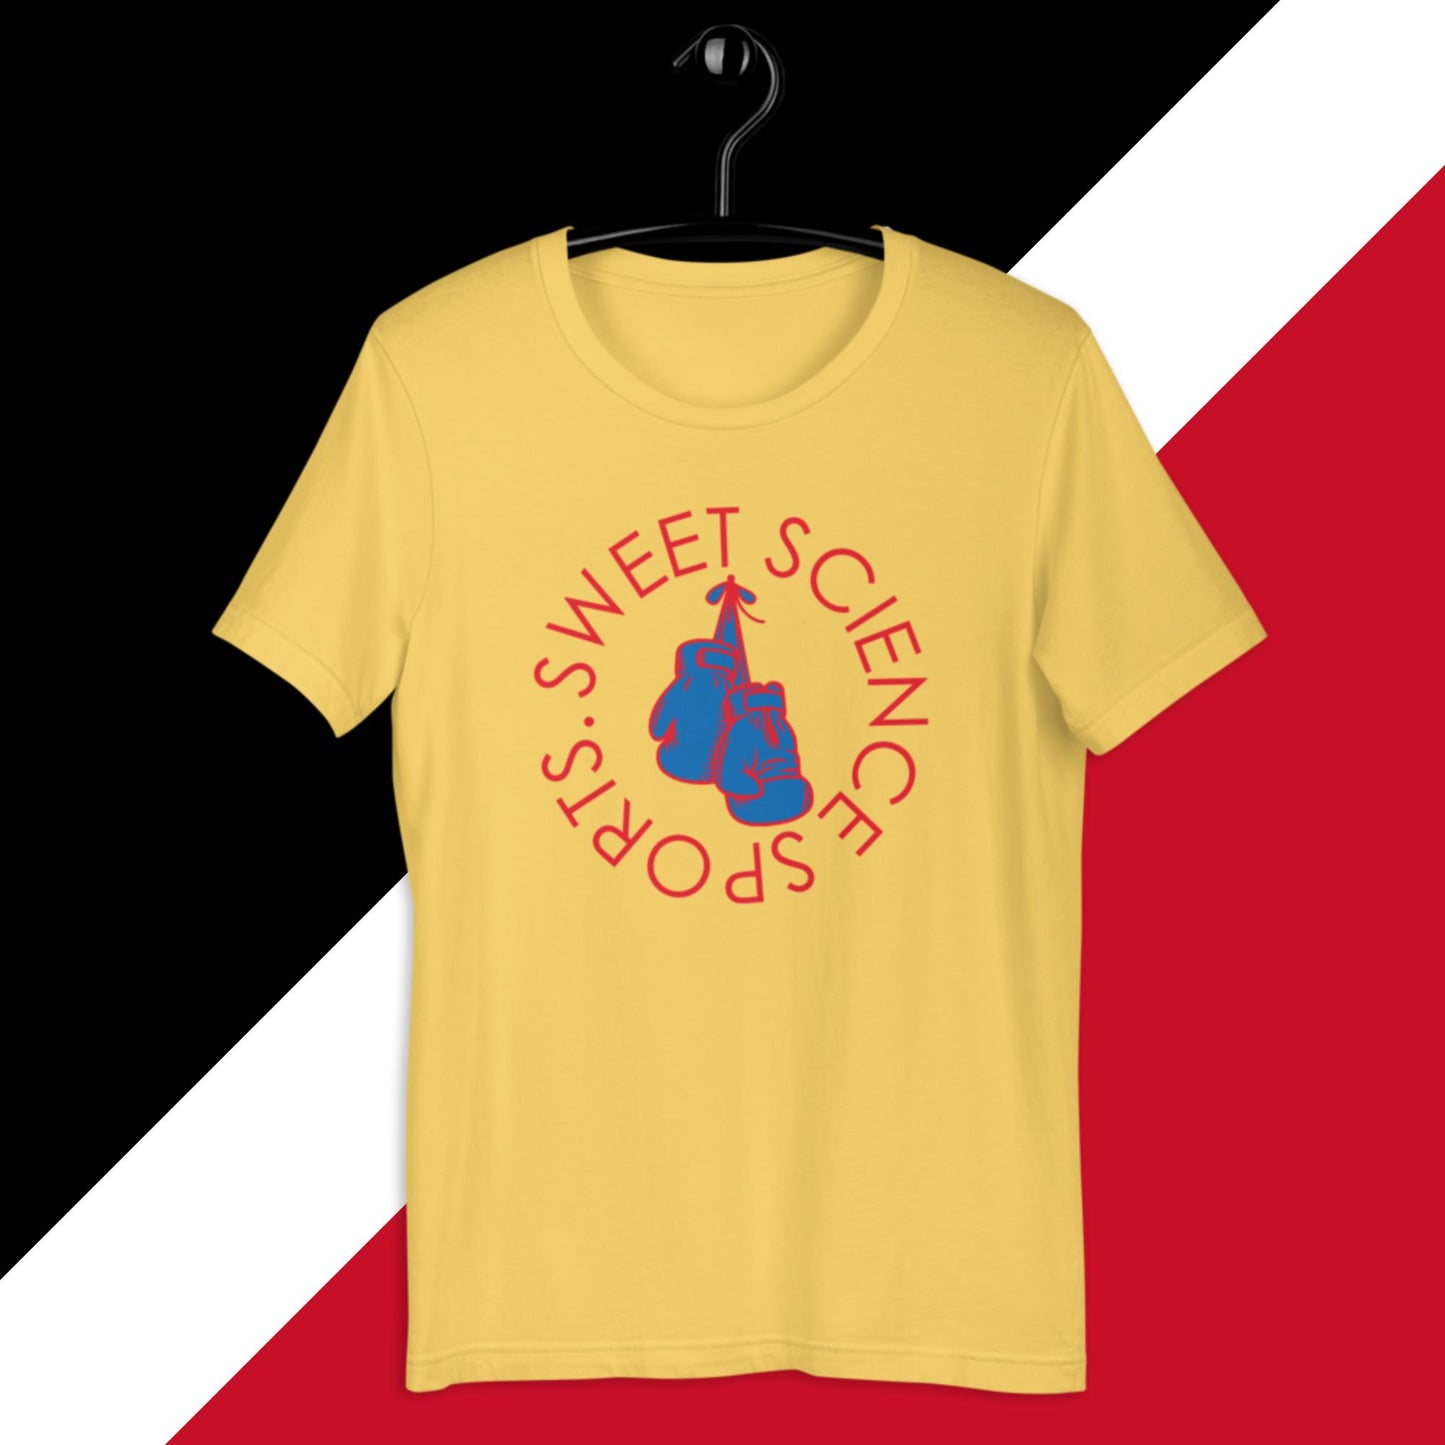 Sweet Science Sports Detroit Pugilist  t-shirt